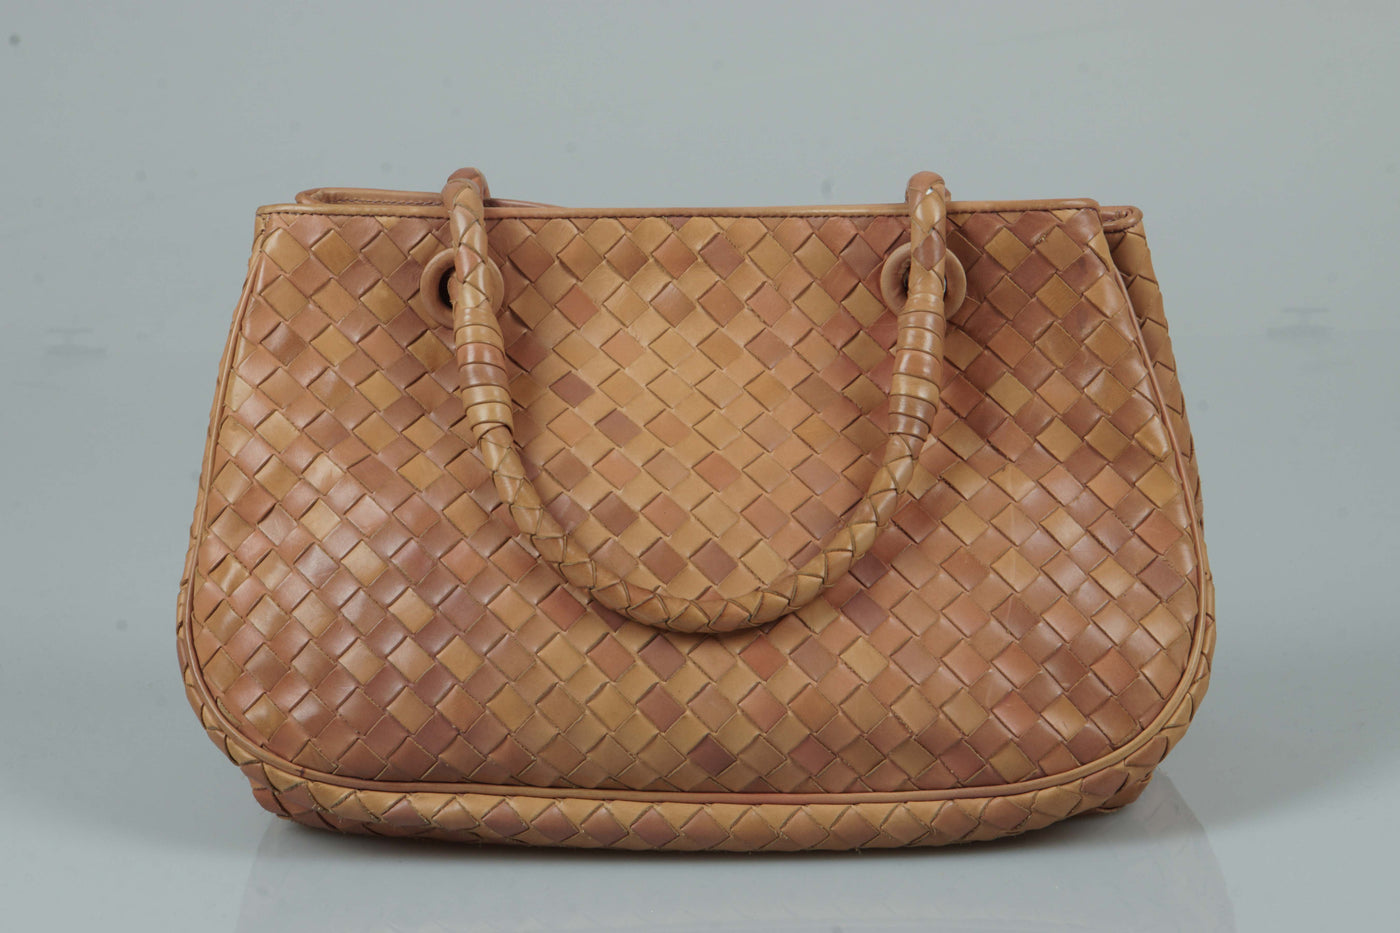 Tan leather handbag